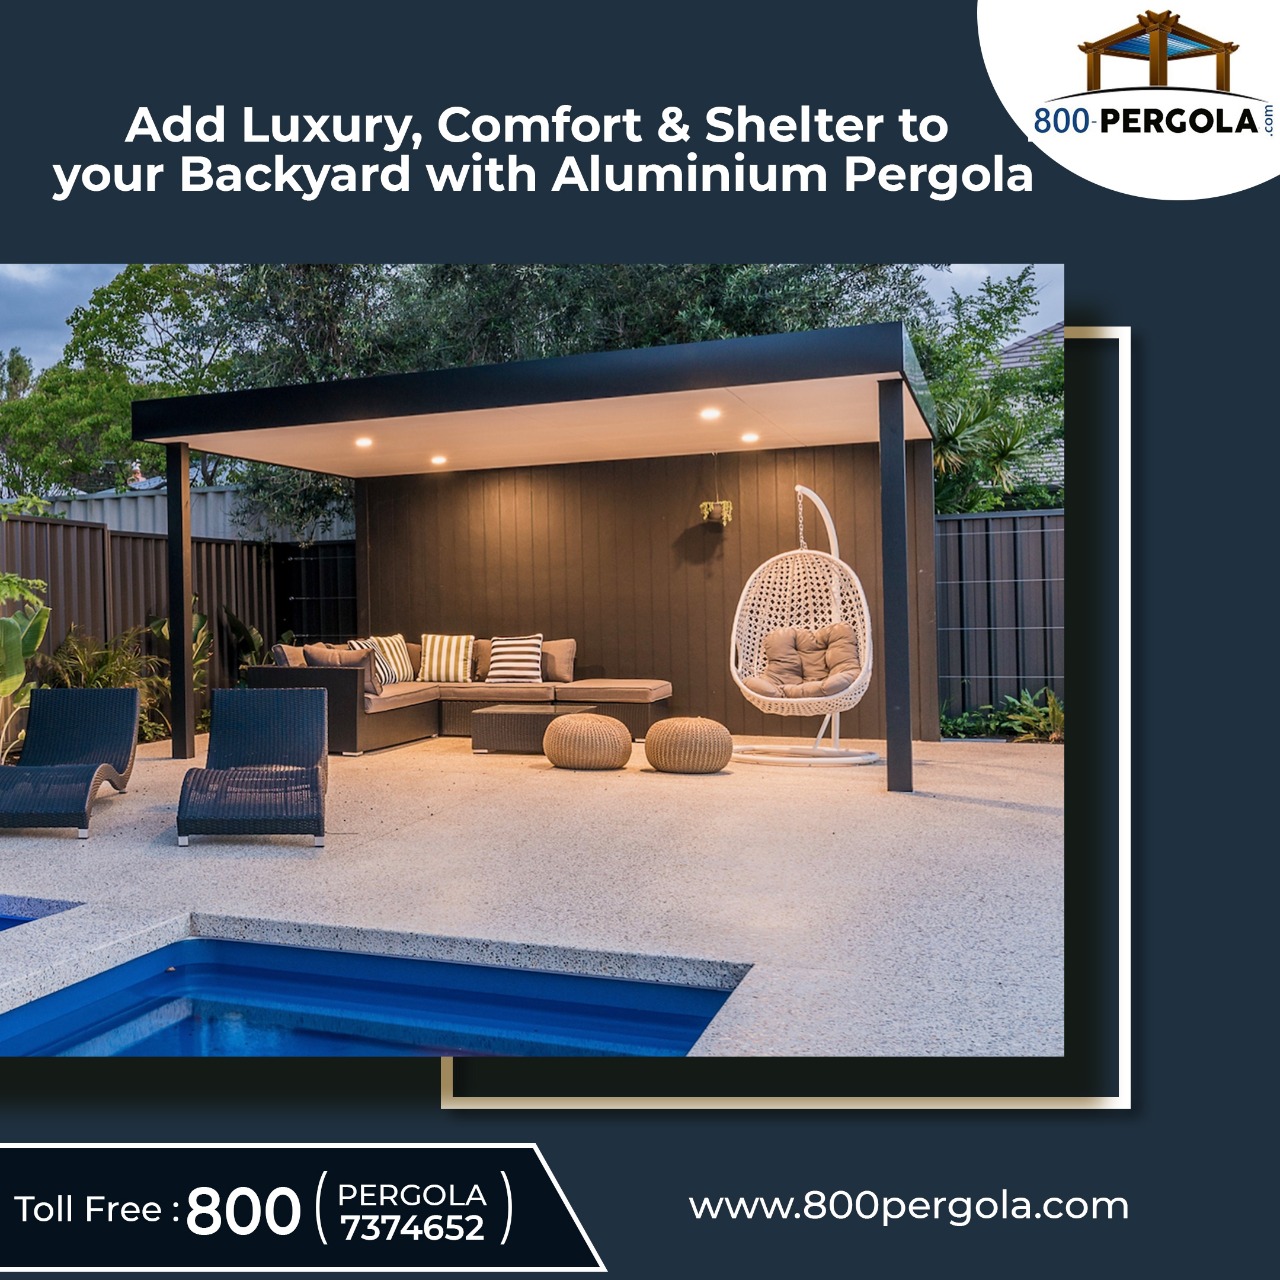 Add Luxury, Comfort & Shelter to your Backyard with Aluminium Pergola